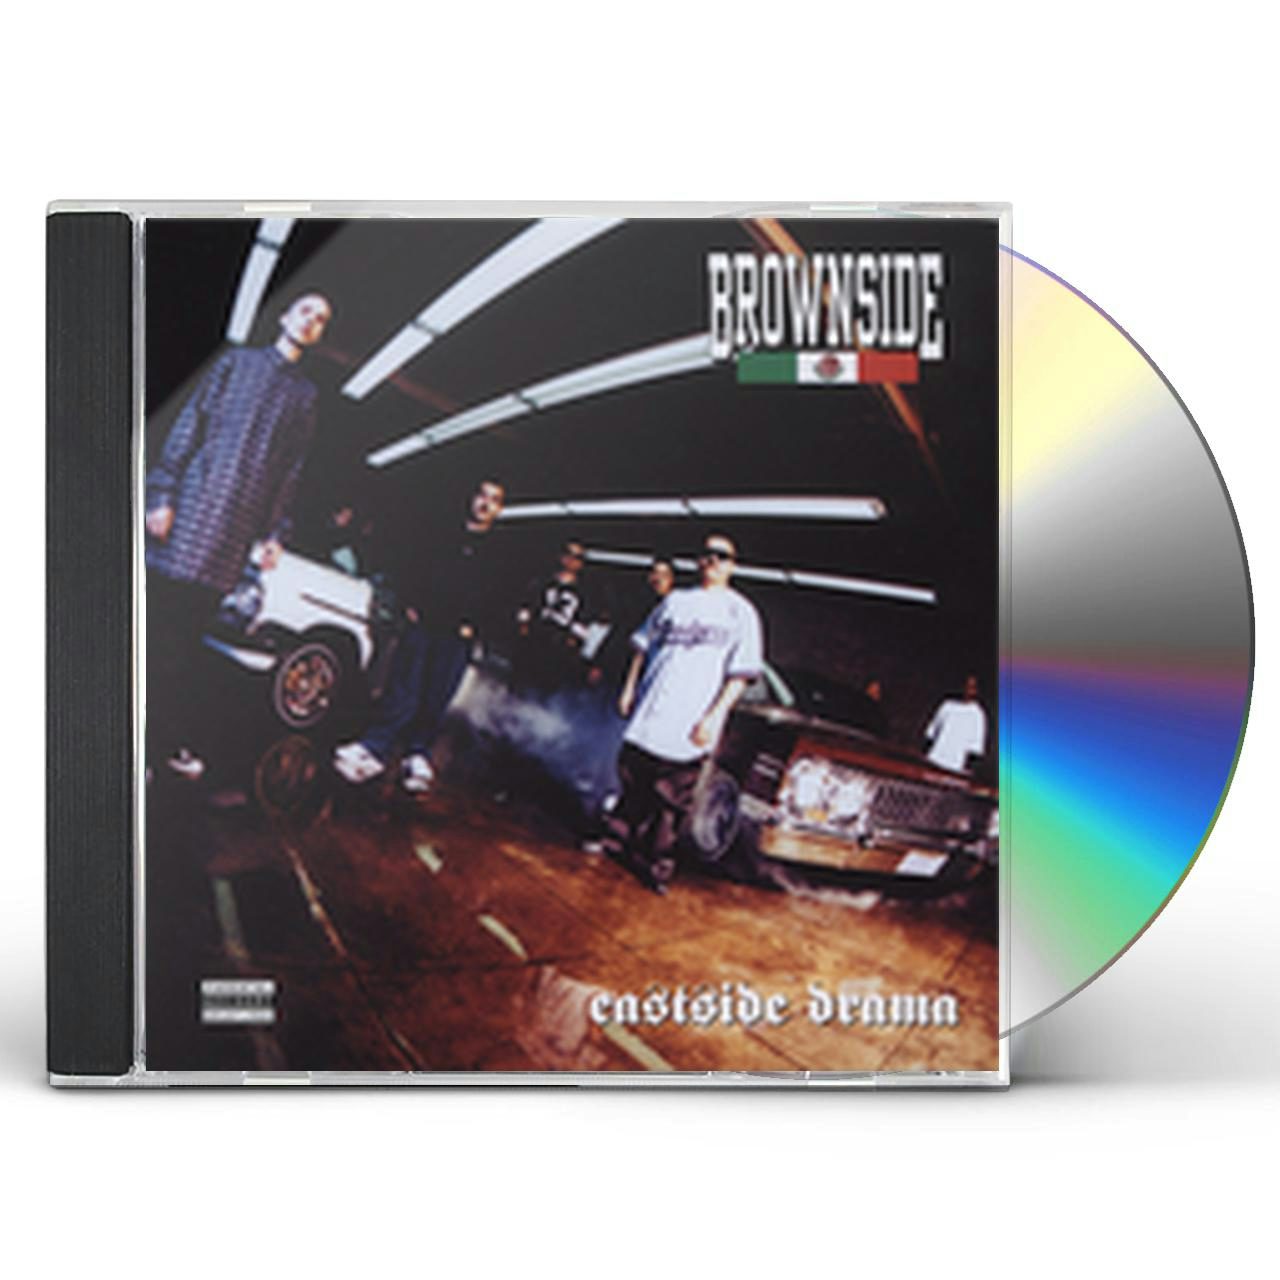 Brownside EASTSIDE DRAMA CD